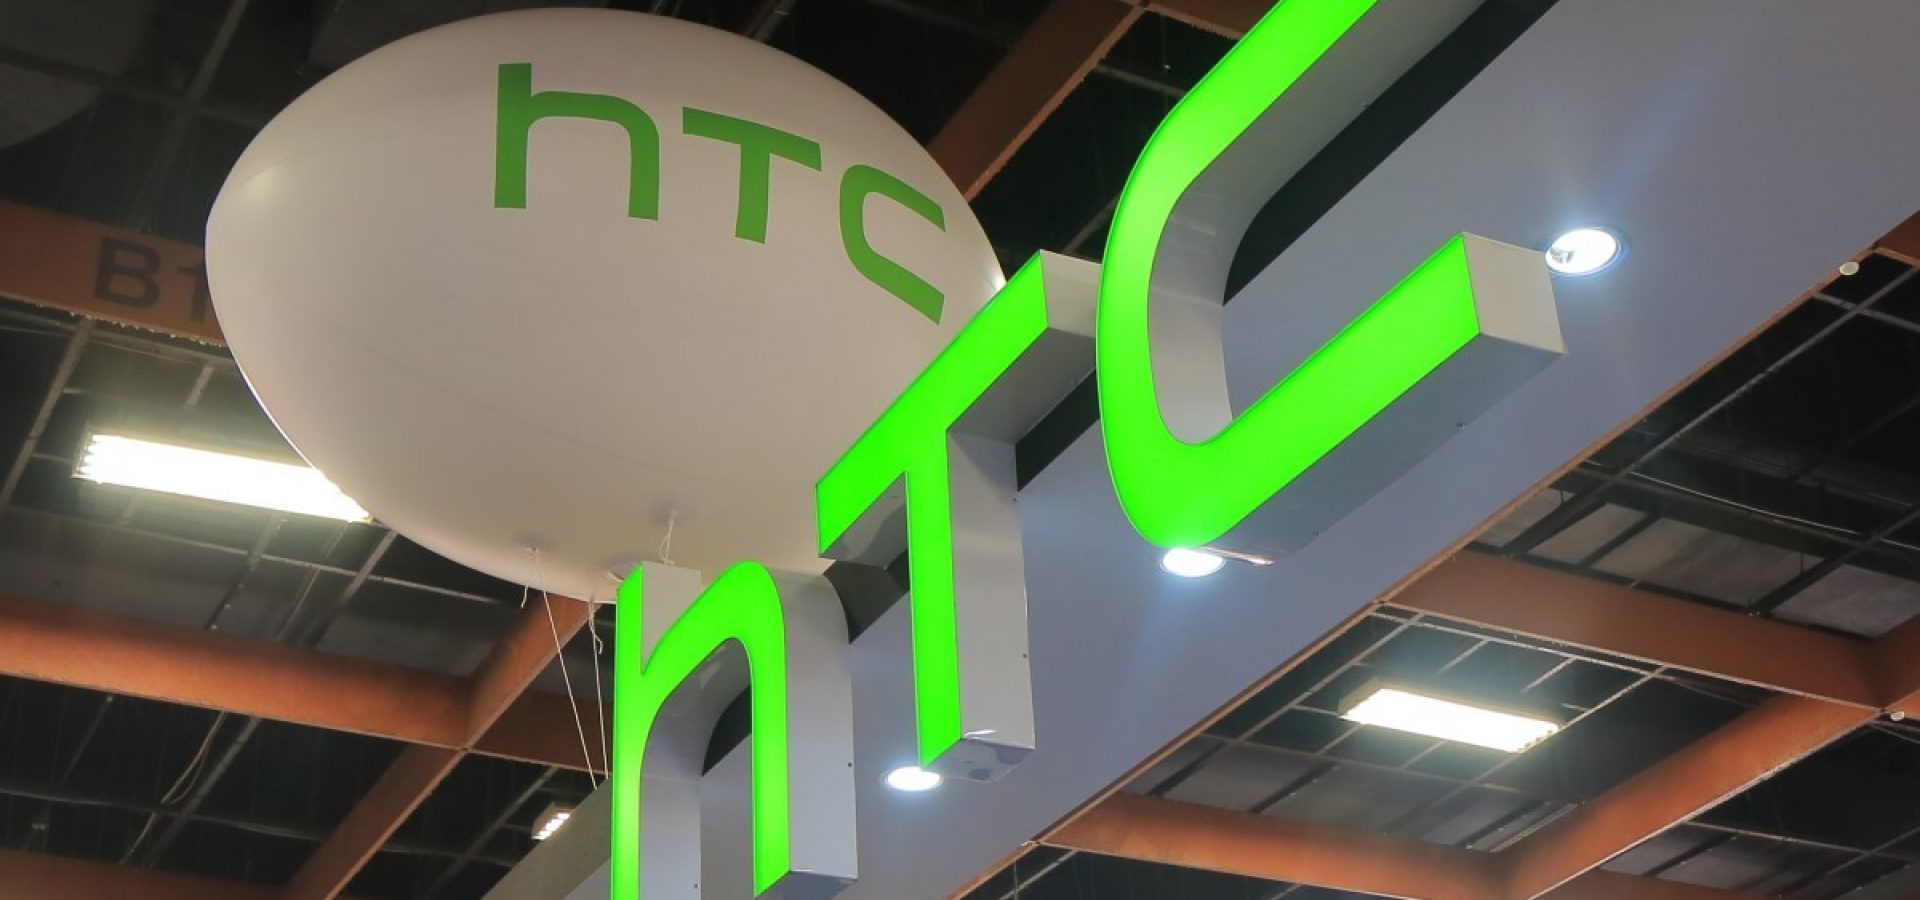 HTC and crypto mining